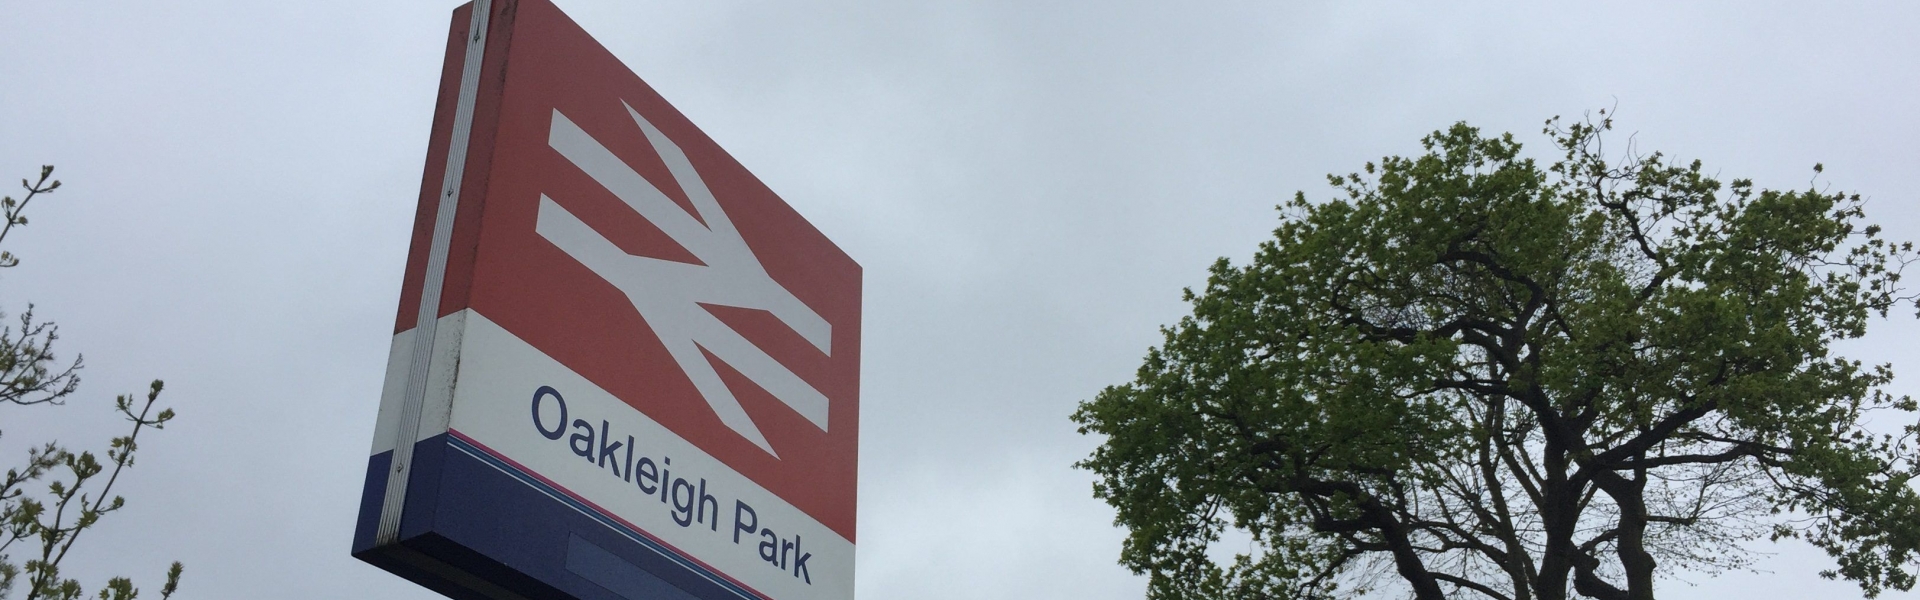 Oakleigh Park station sign